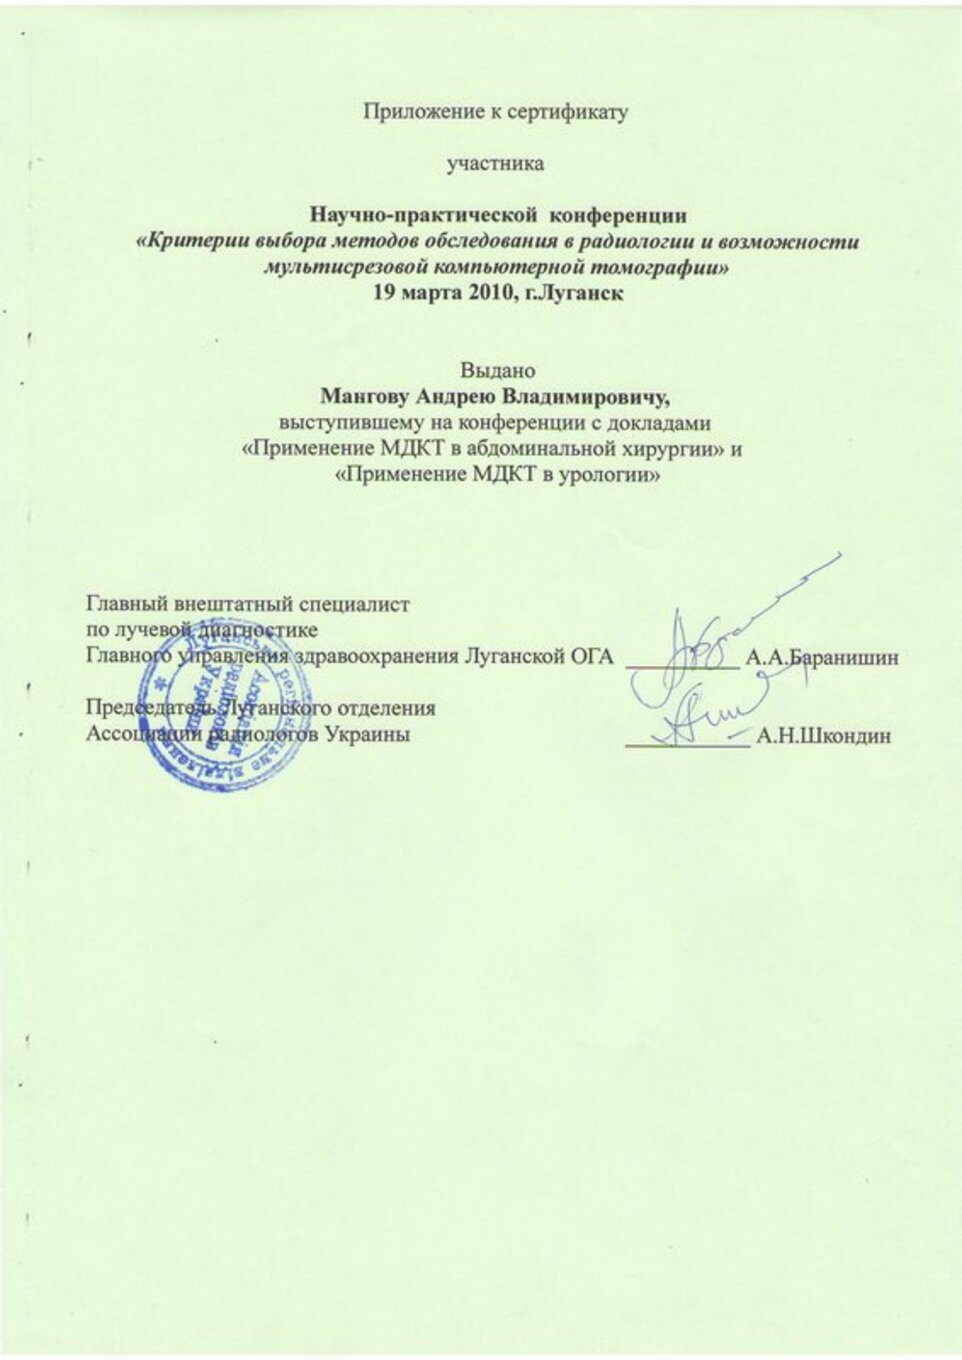 certificates/mangov-andrij-volodimirovich/mangov-certificates-05.jpg